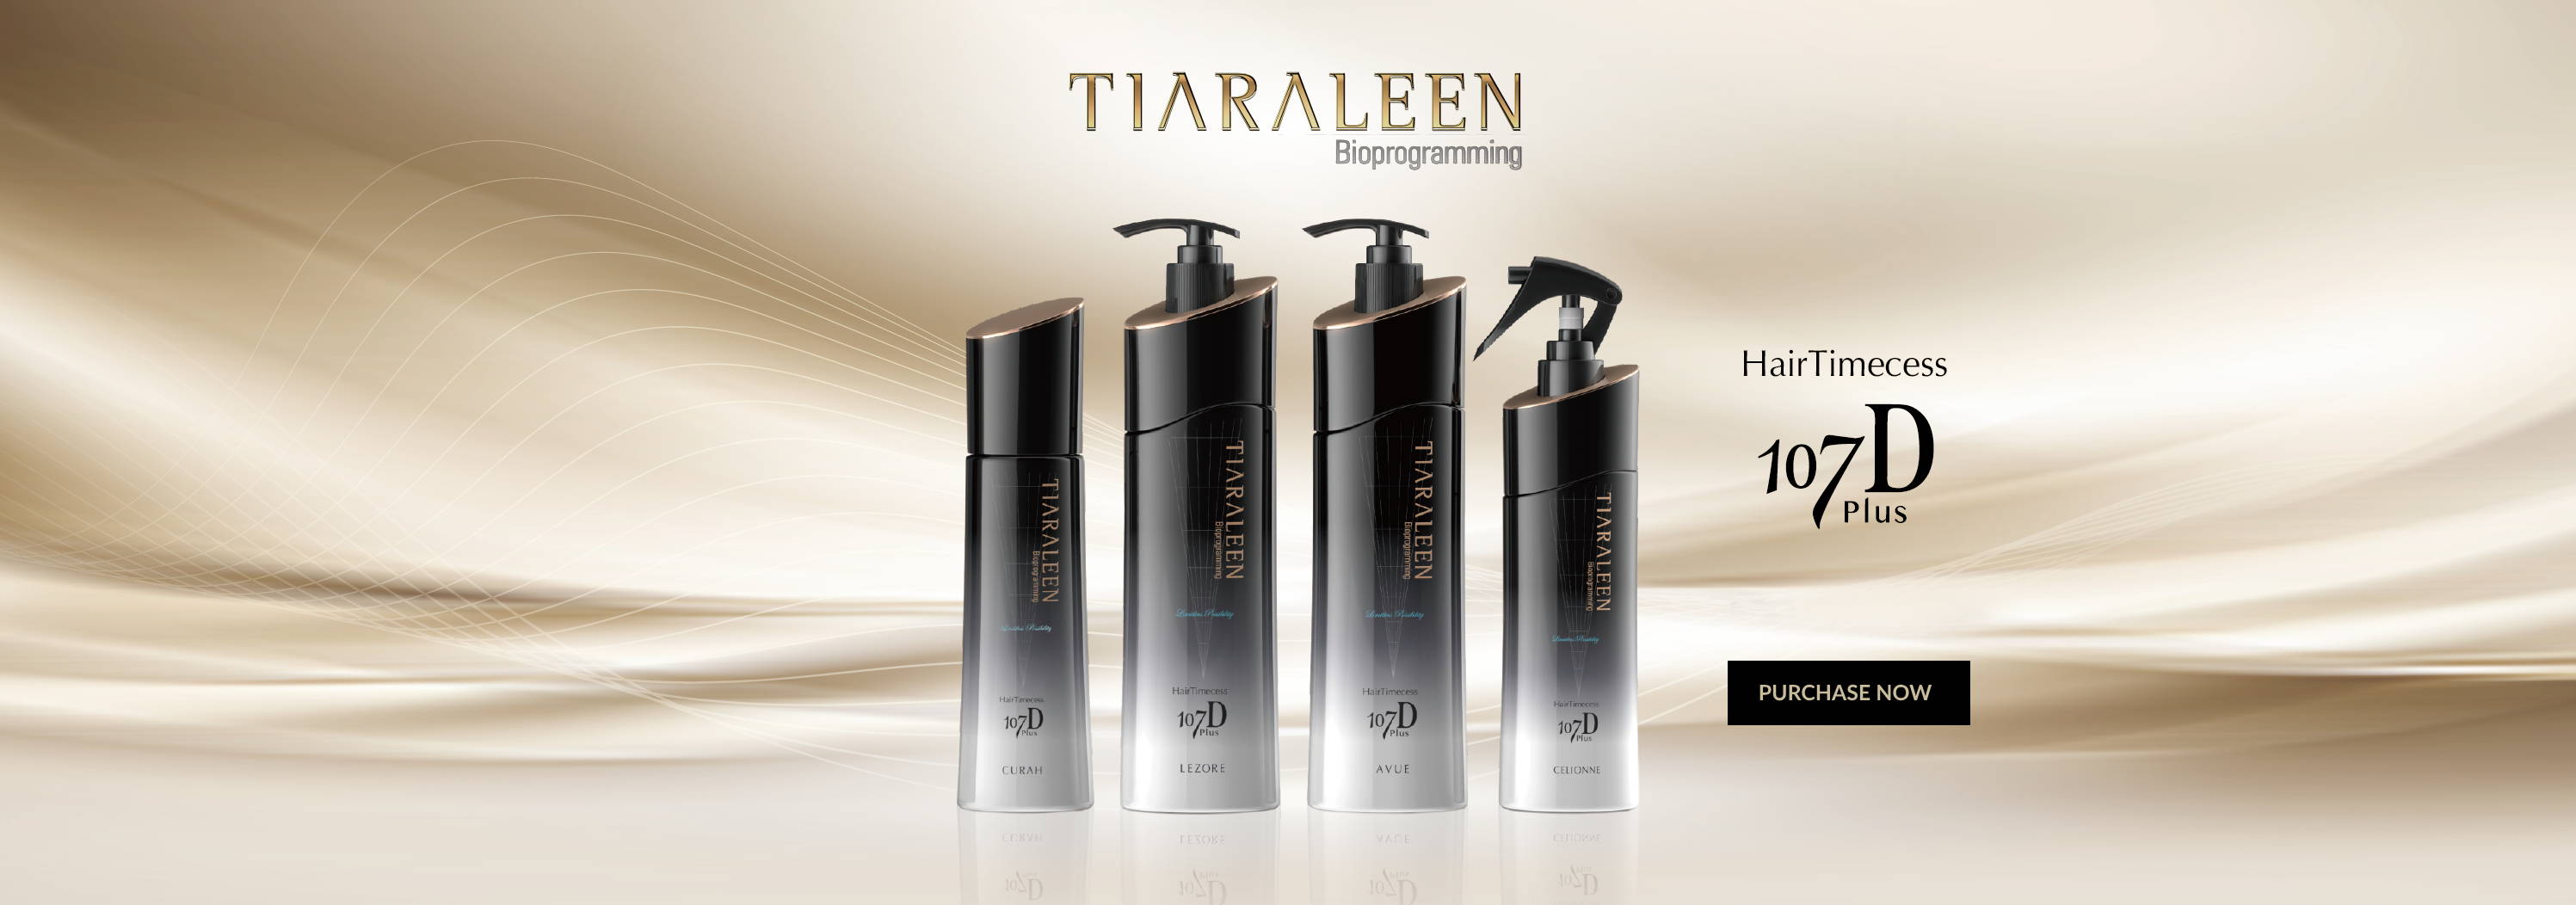 Tiaraleen HairTimecess 27D Plus